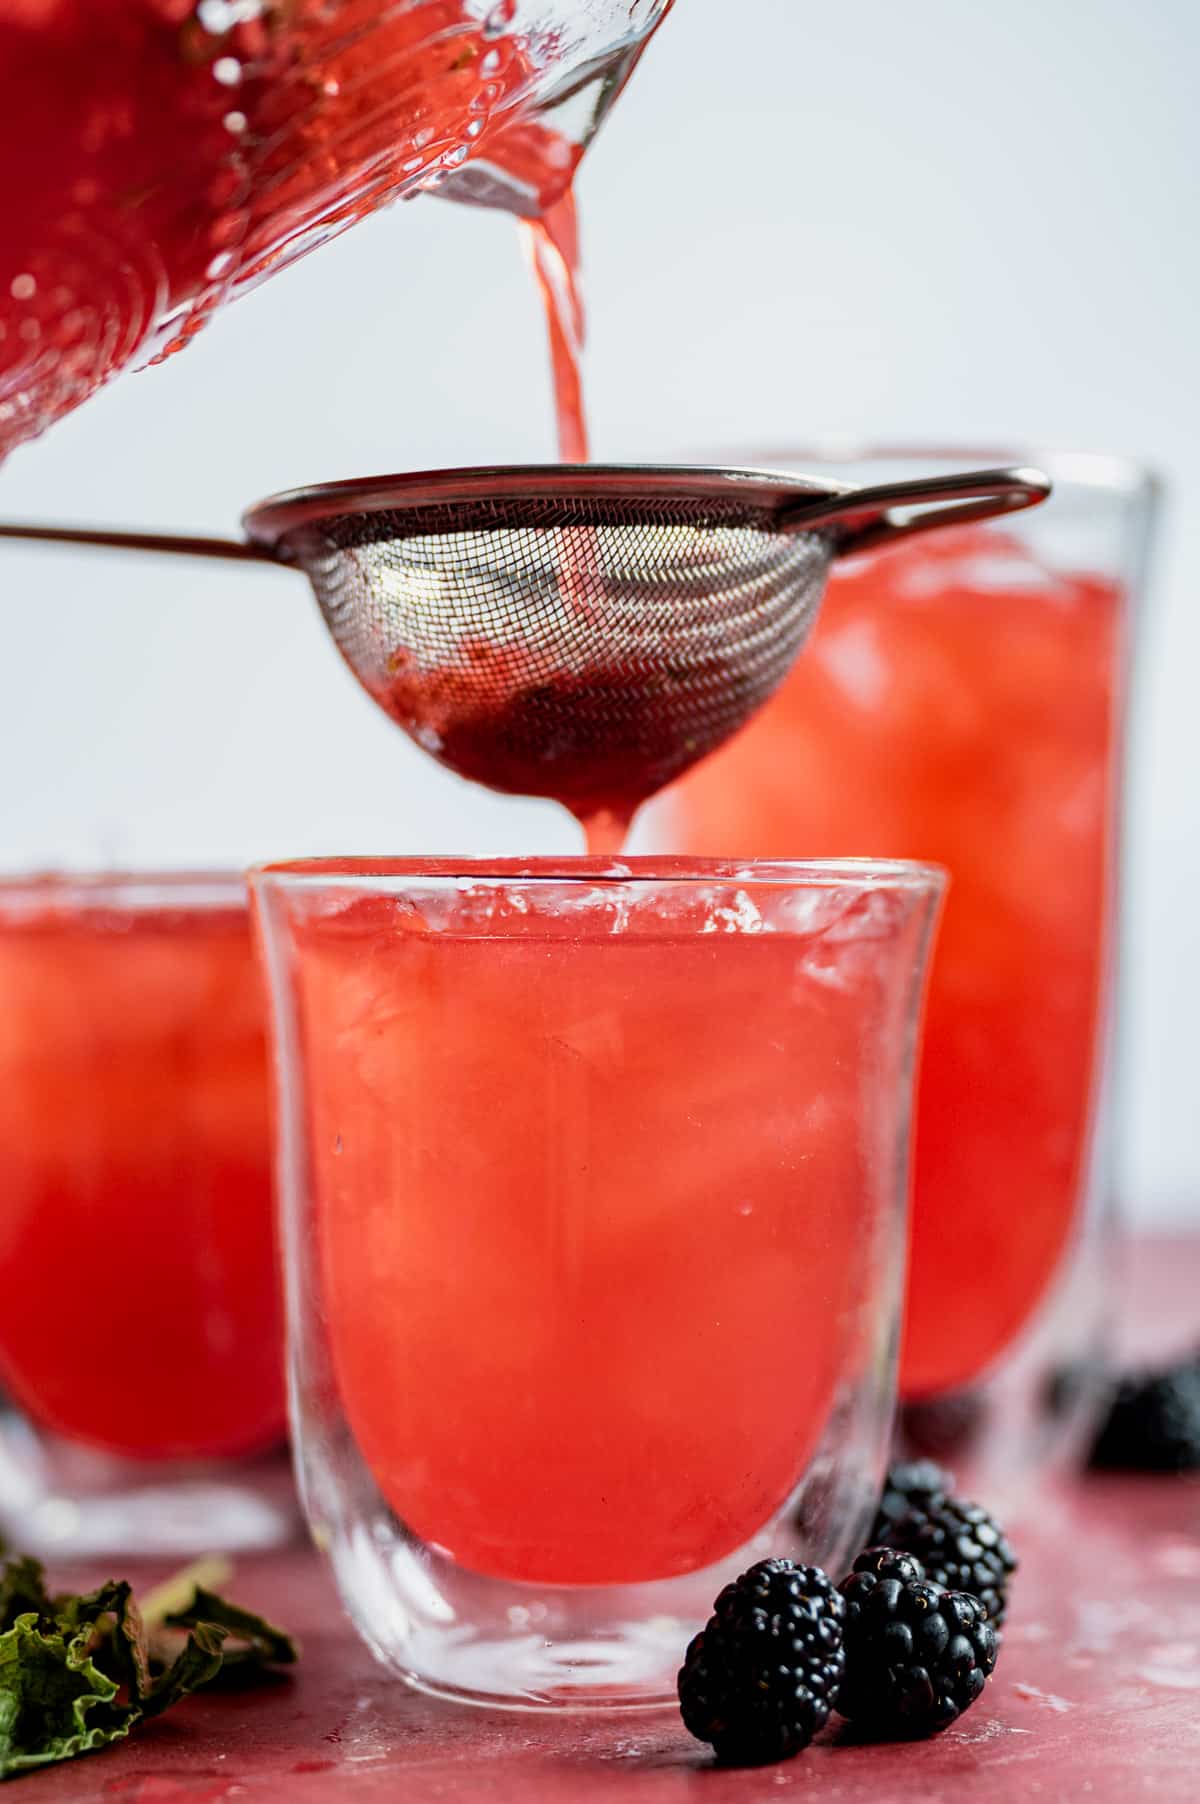 straining raspberry puree into a glass